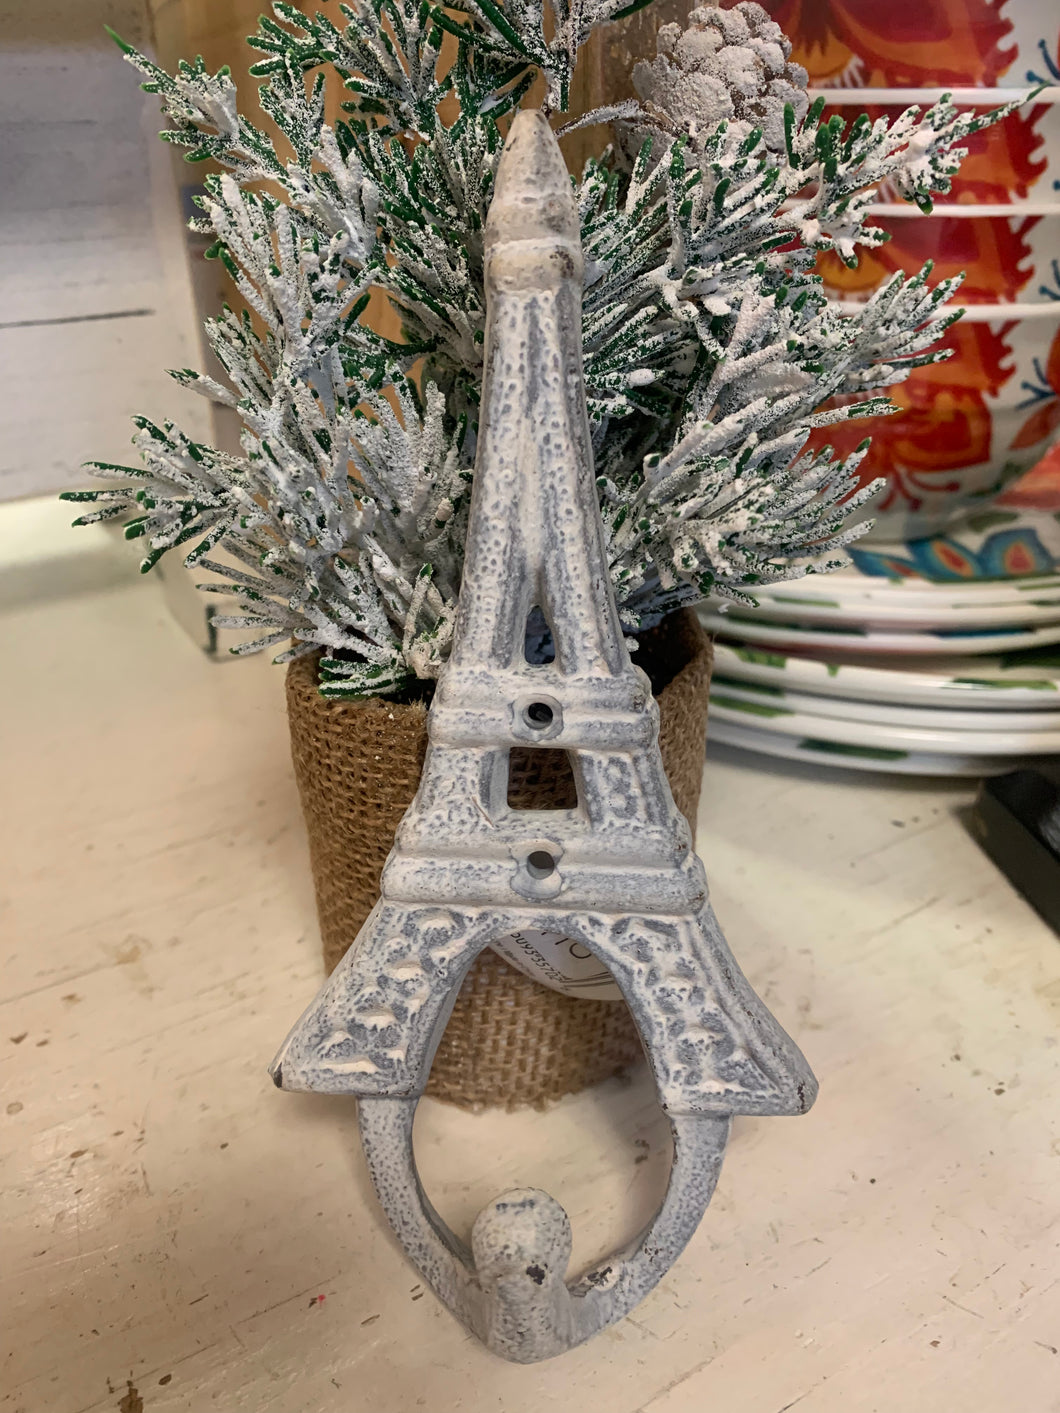 Eiffel Tower Hooks (Only 1 Left!)